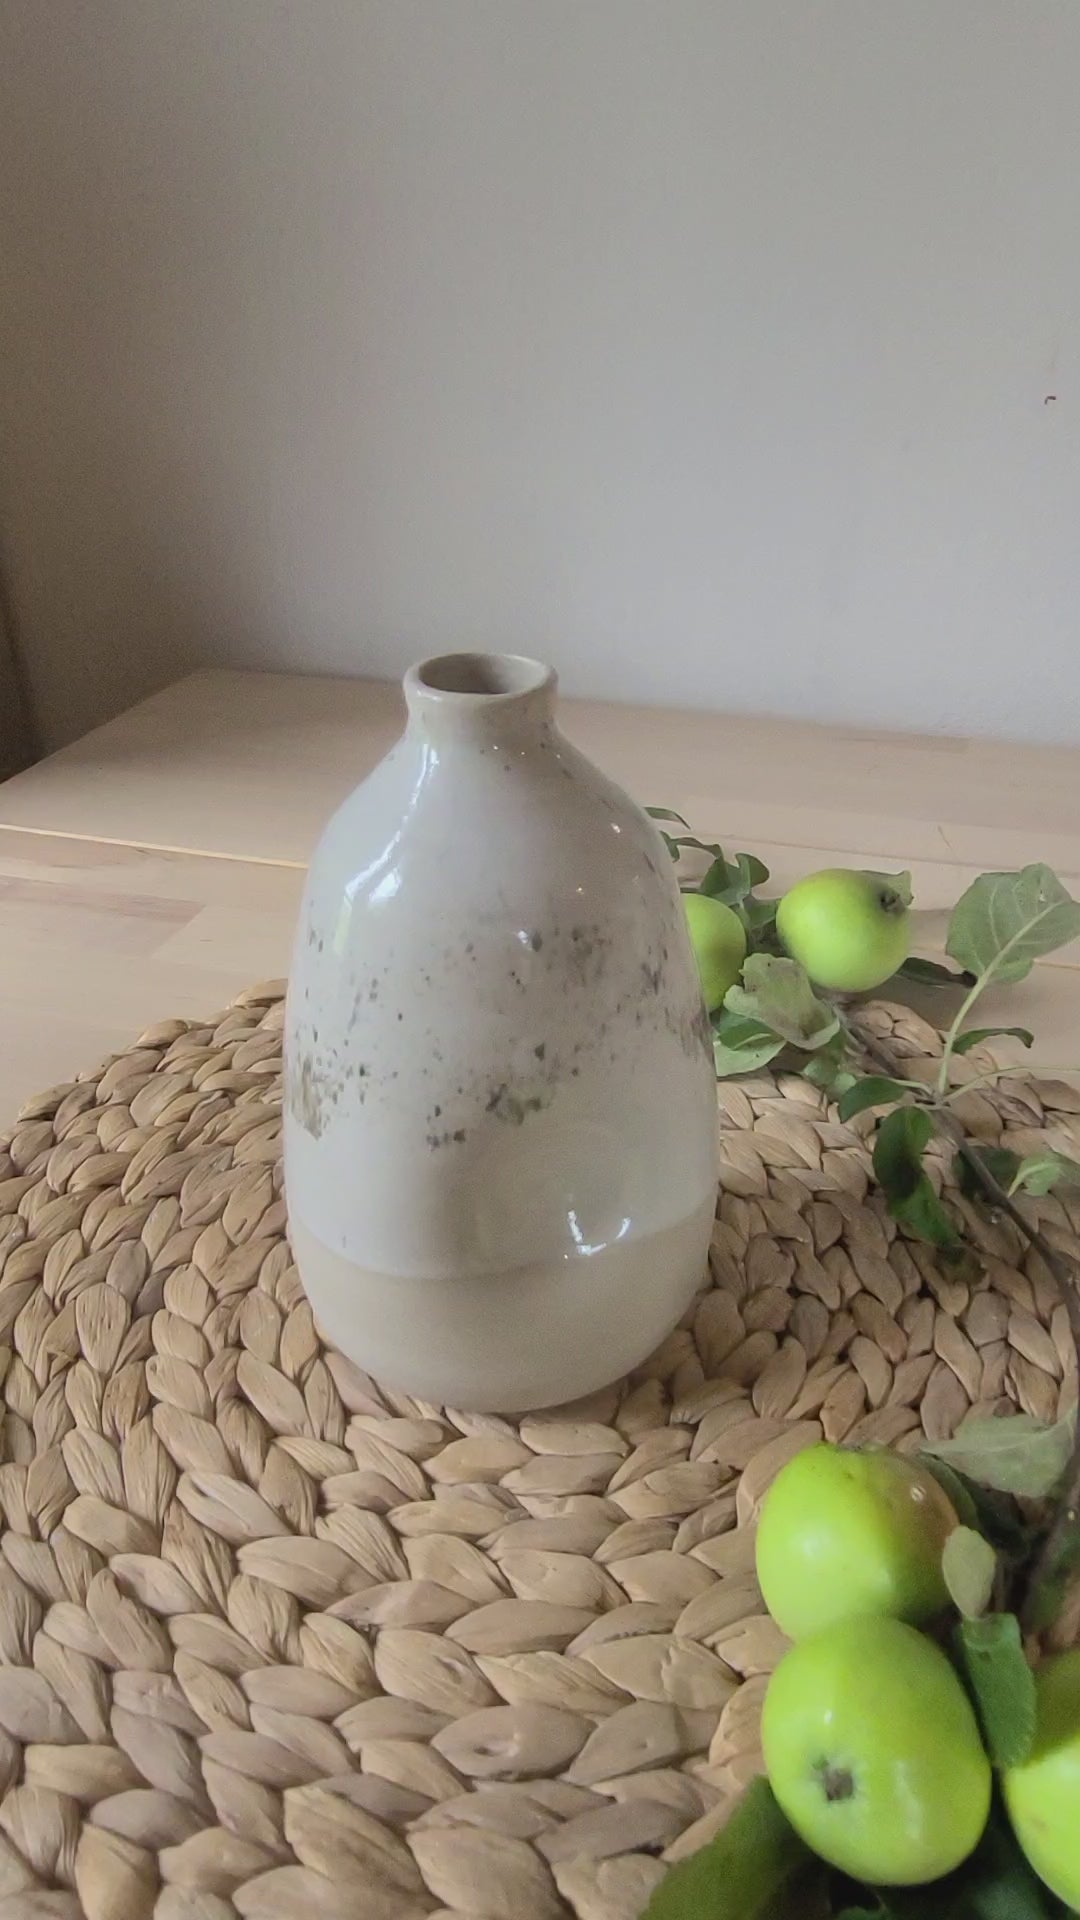 "Artisan-made Vase - Cream White Pottery with Striking Milk White and Black Speckles"